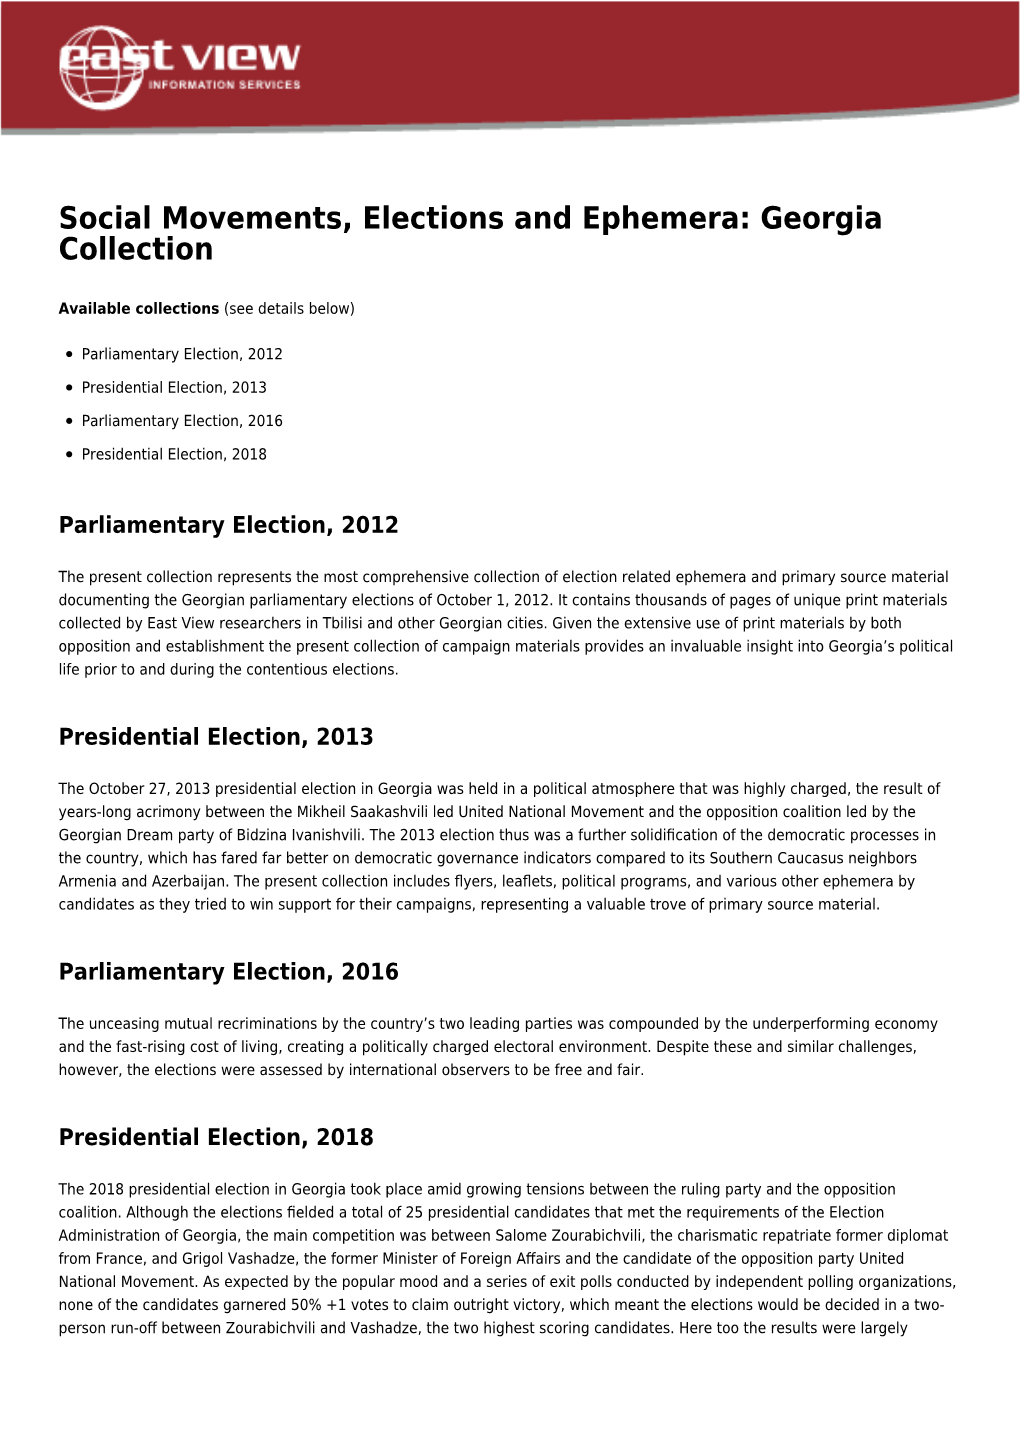 Social Movements, Elections and Ephemera: Georgia Collection